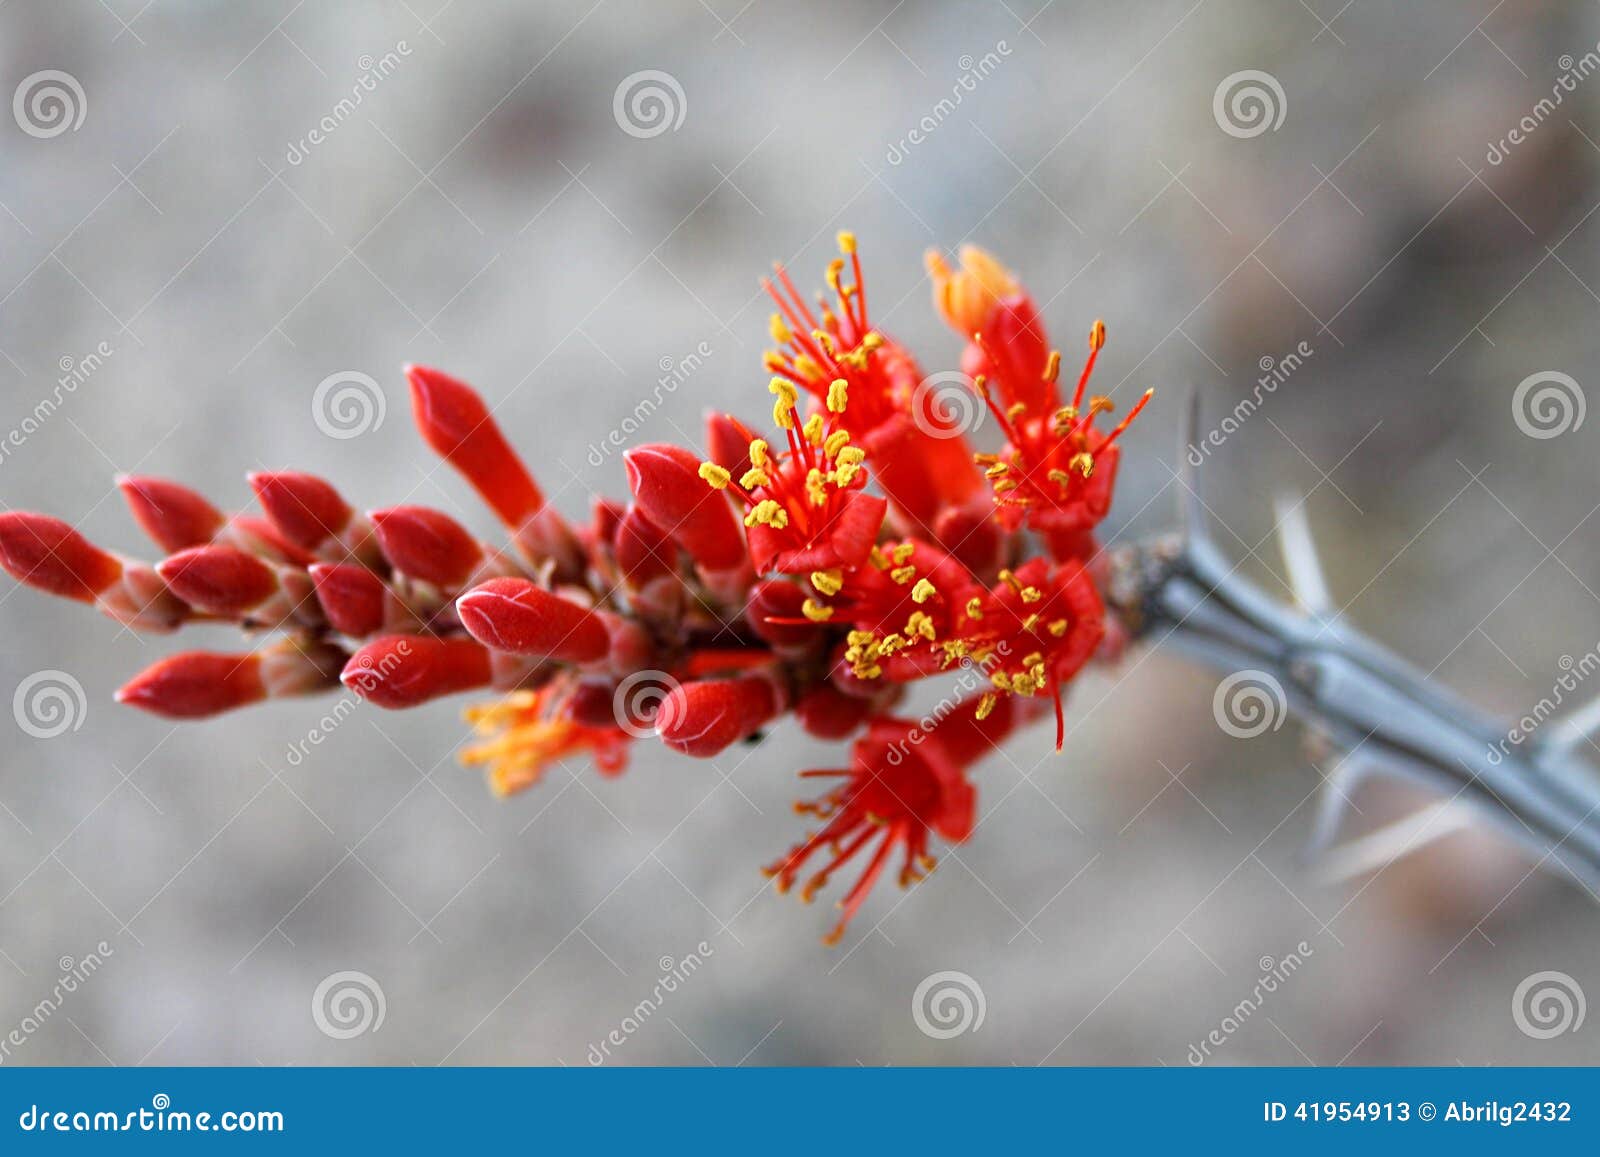 ocotillo crimson bloom